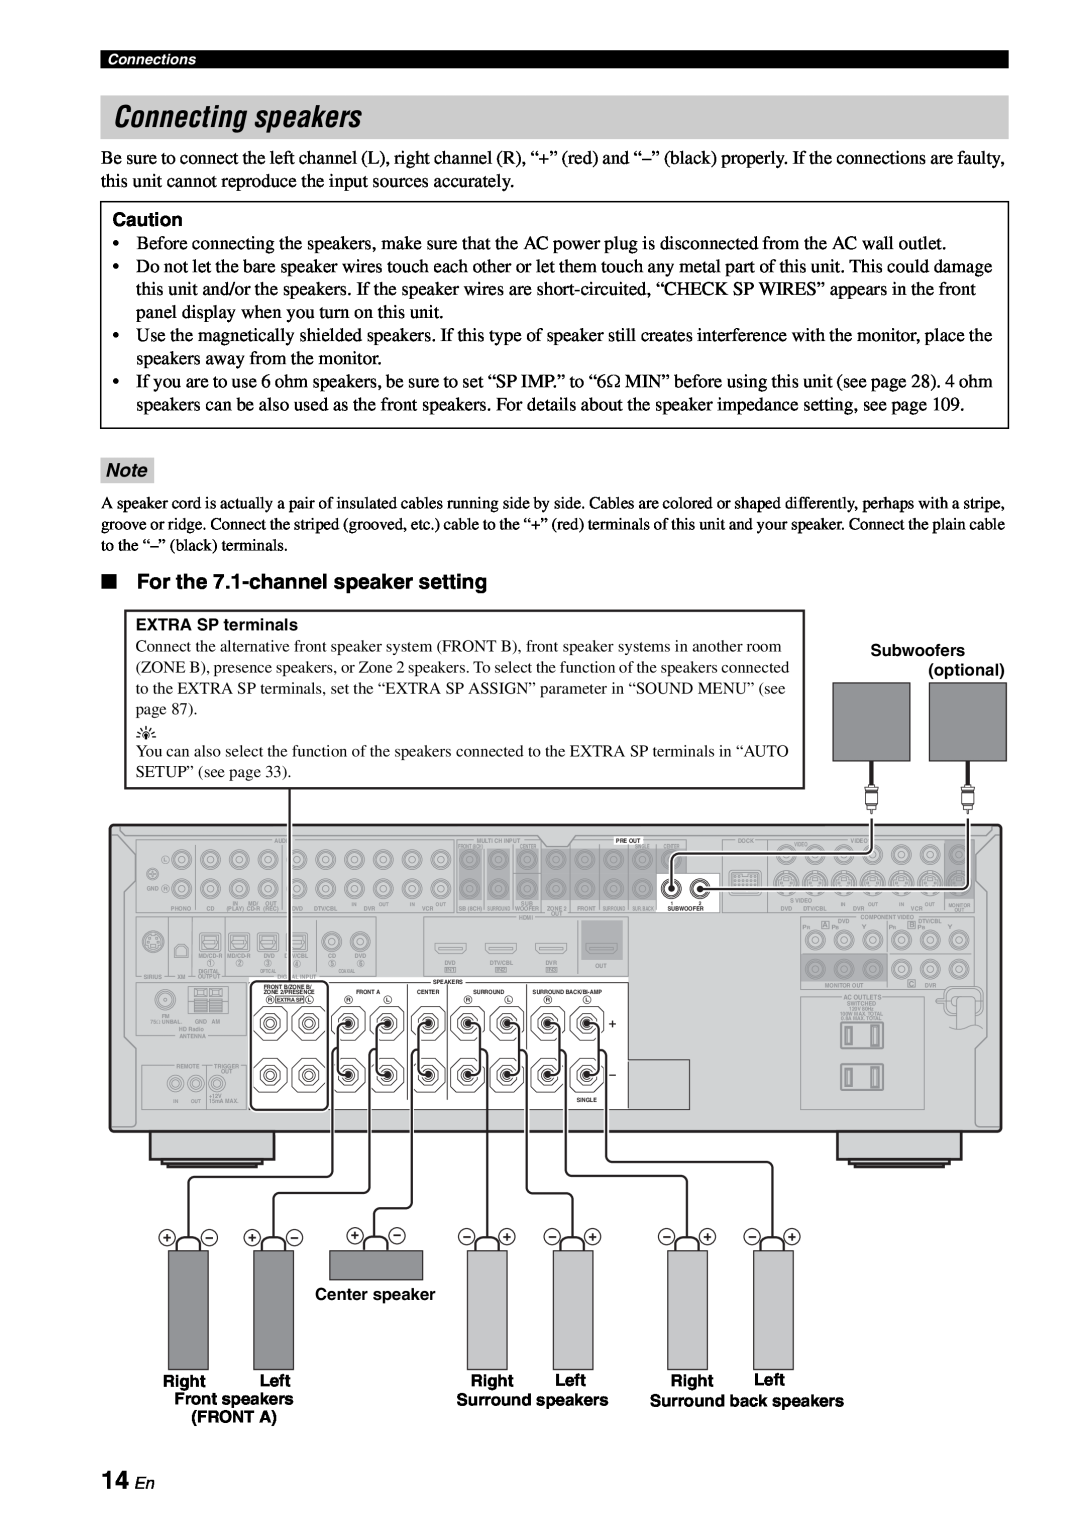 Yamaha RX-V863 owner manual Connecting speakers, 14 En, For the 7.1-channelspeaker setting 